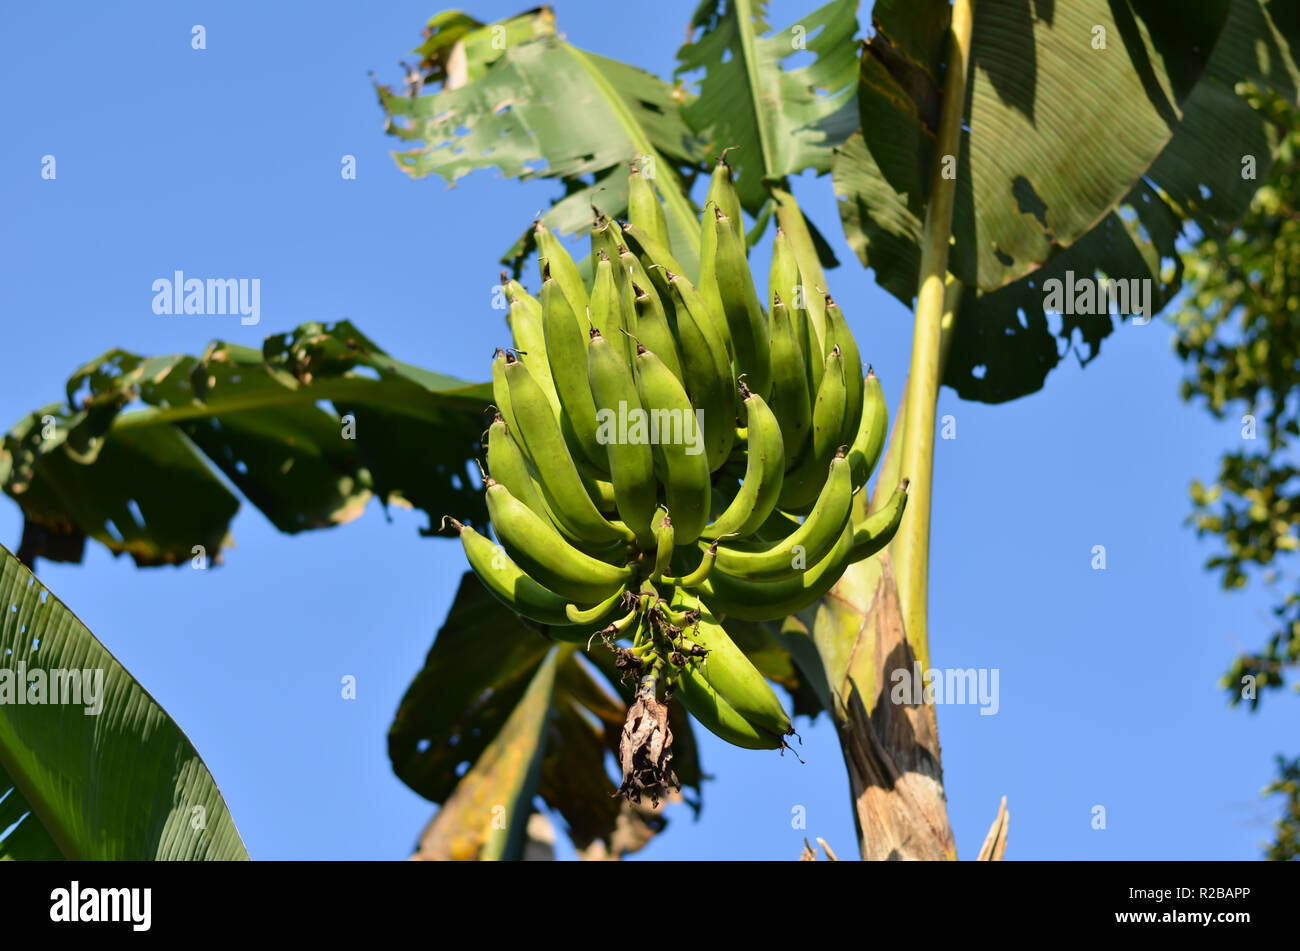 Plantain fruits hanging on the banana tree Stock Photo